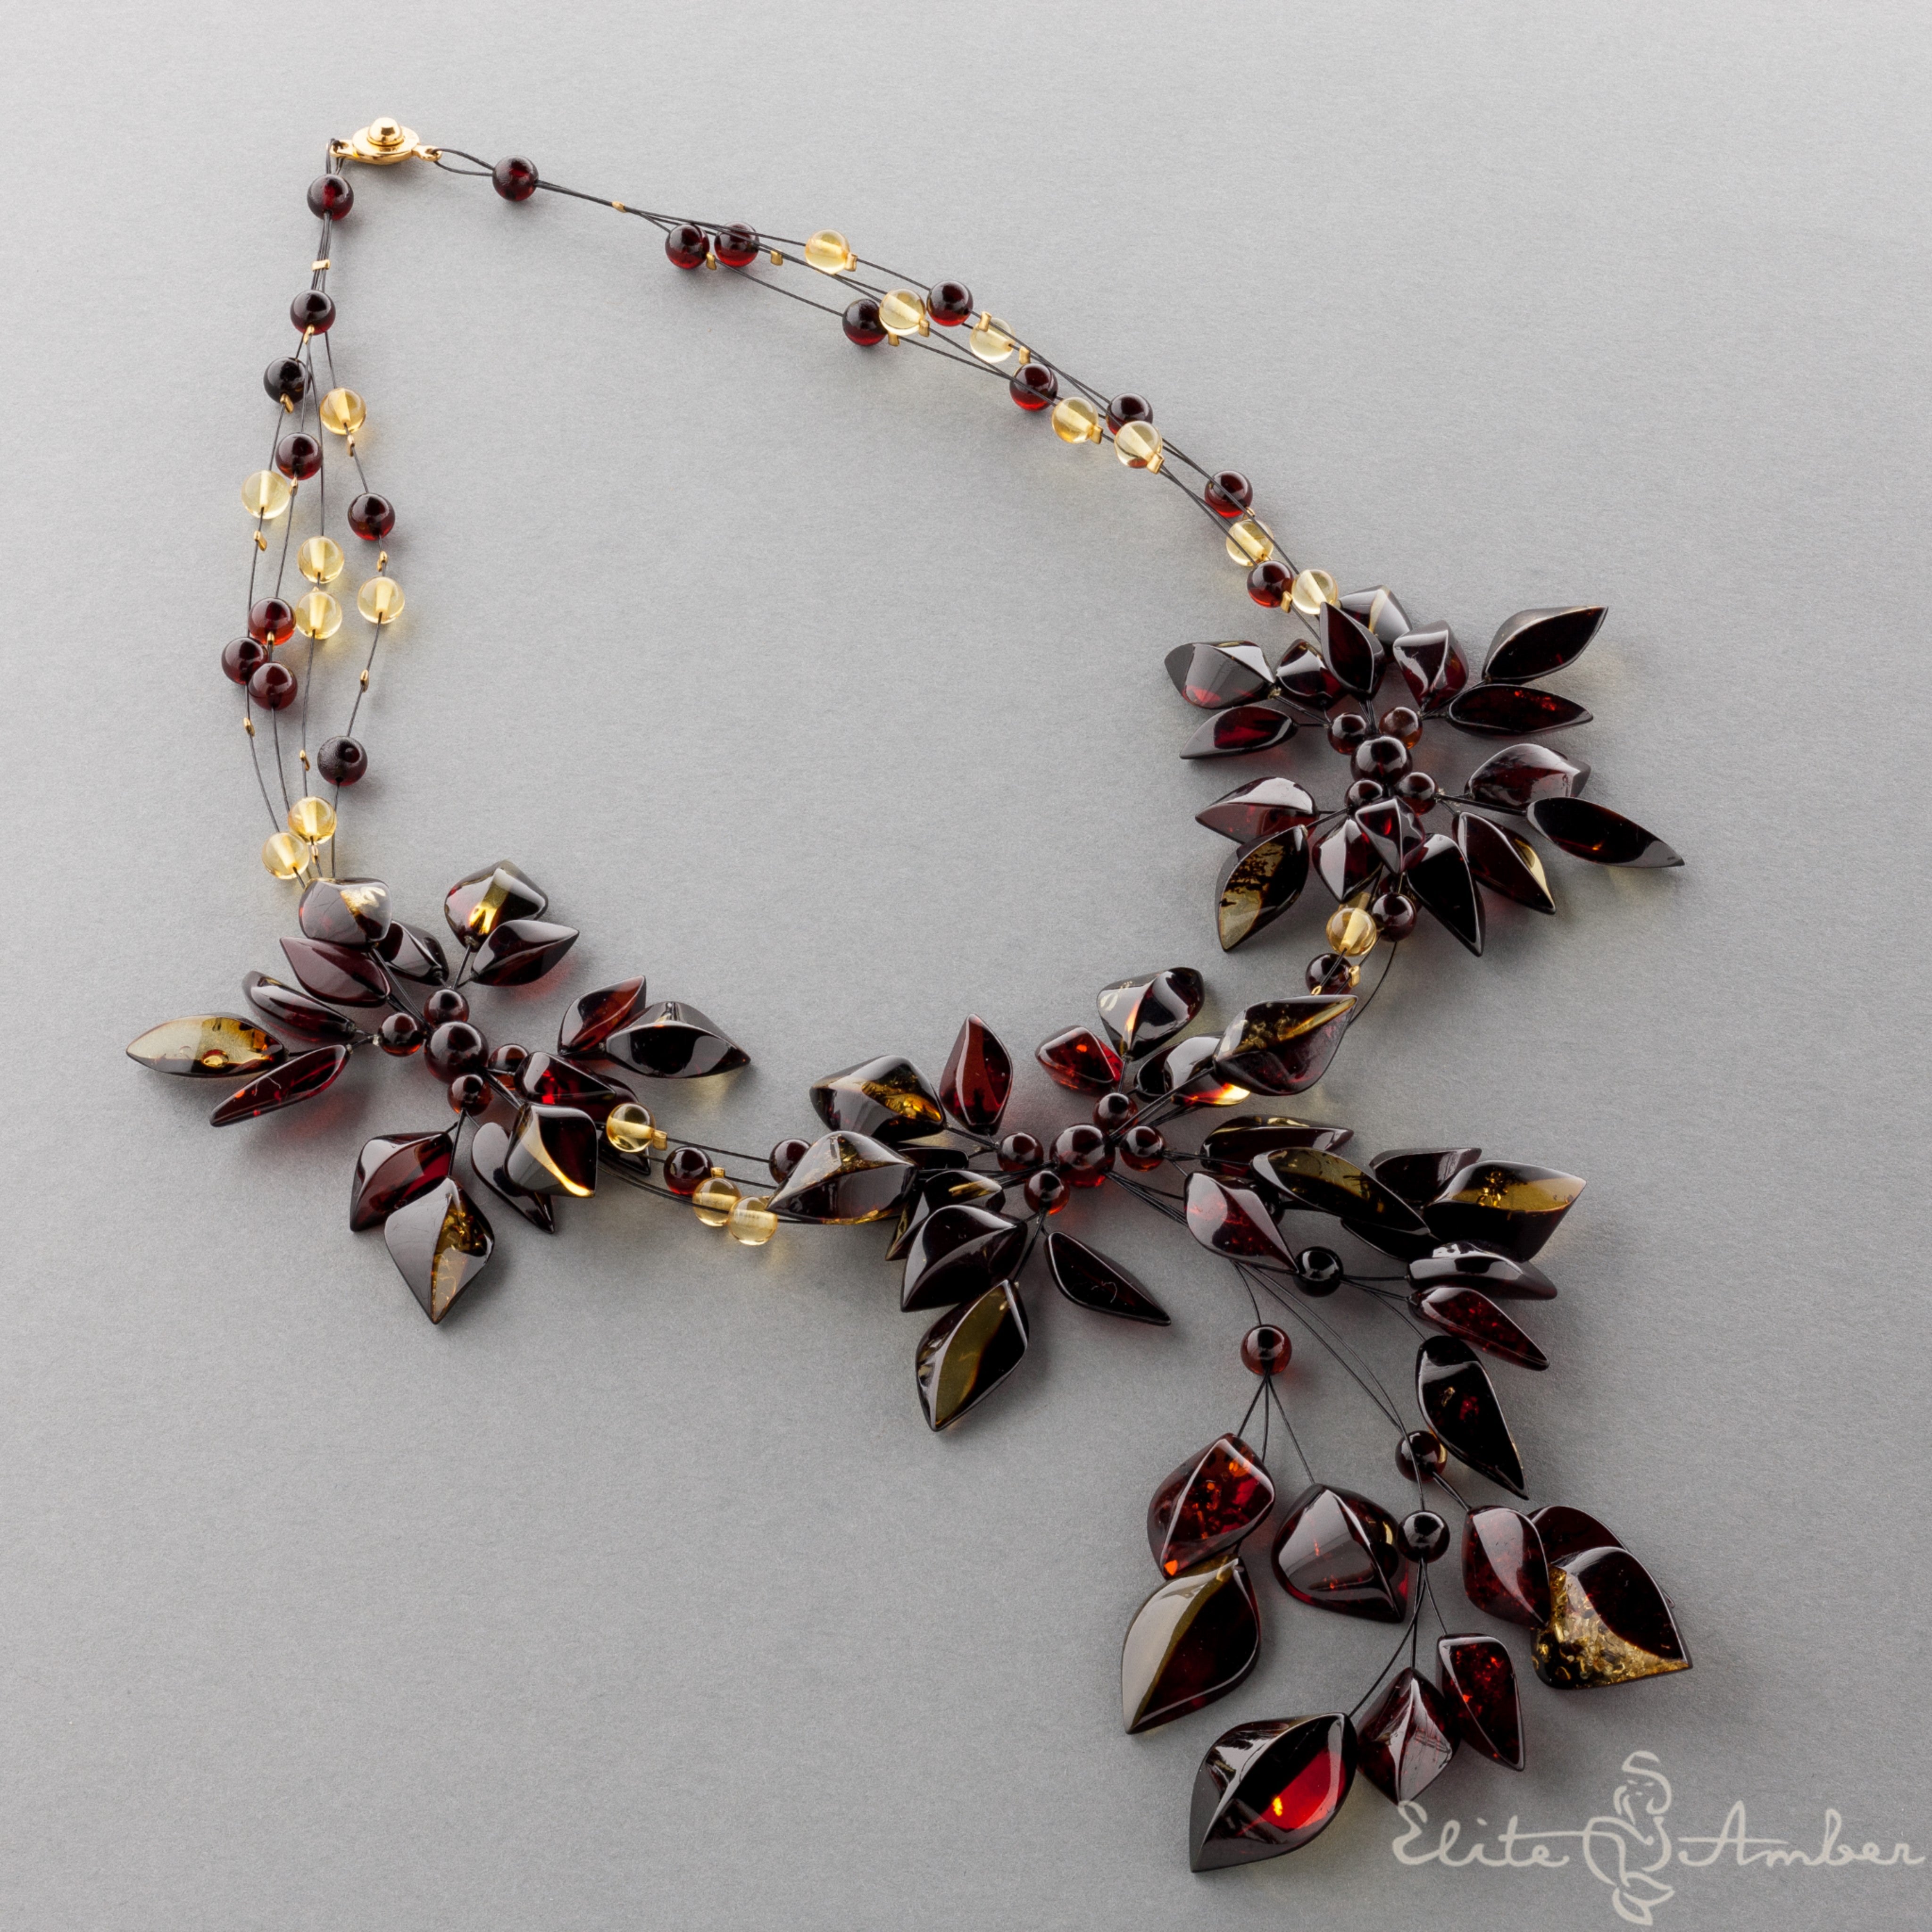 Amber necklace "Amazing wind flowers"